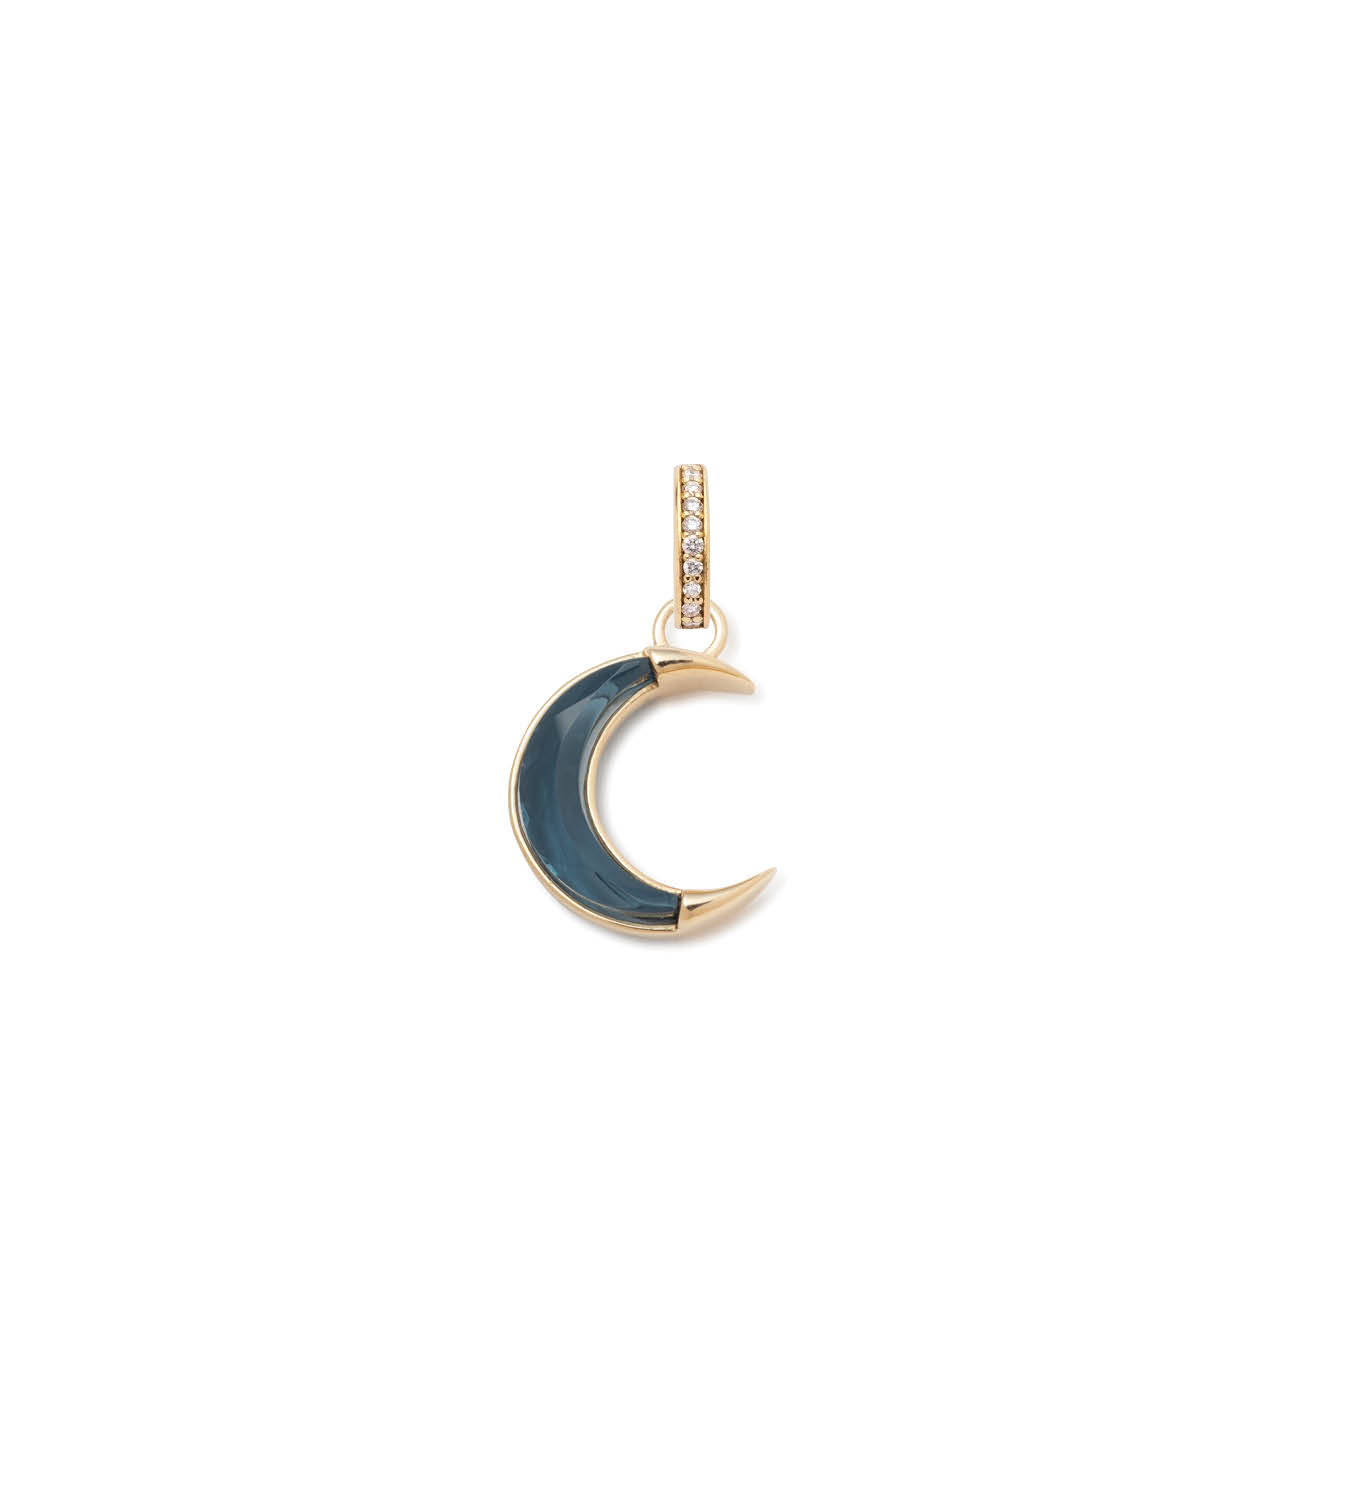 Gemstone Crescent - Karma : 15mm Medallion London Blue Topaz with Oval Pushgate